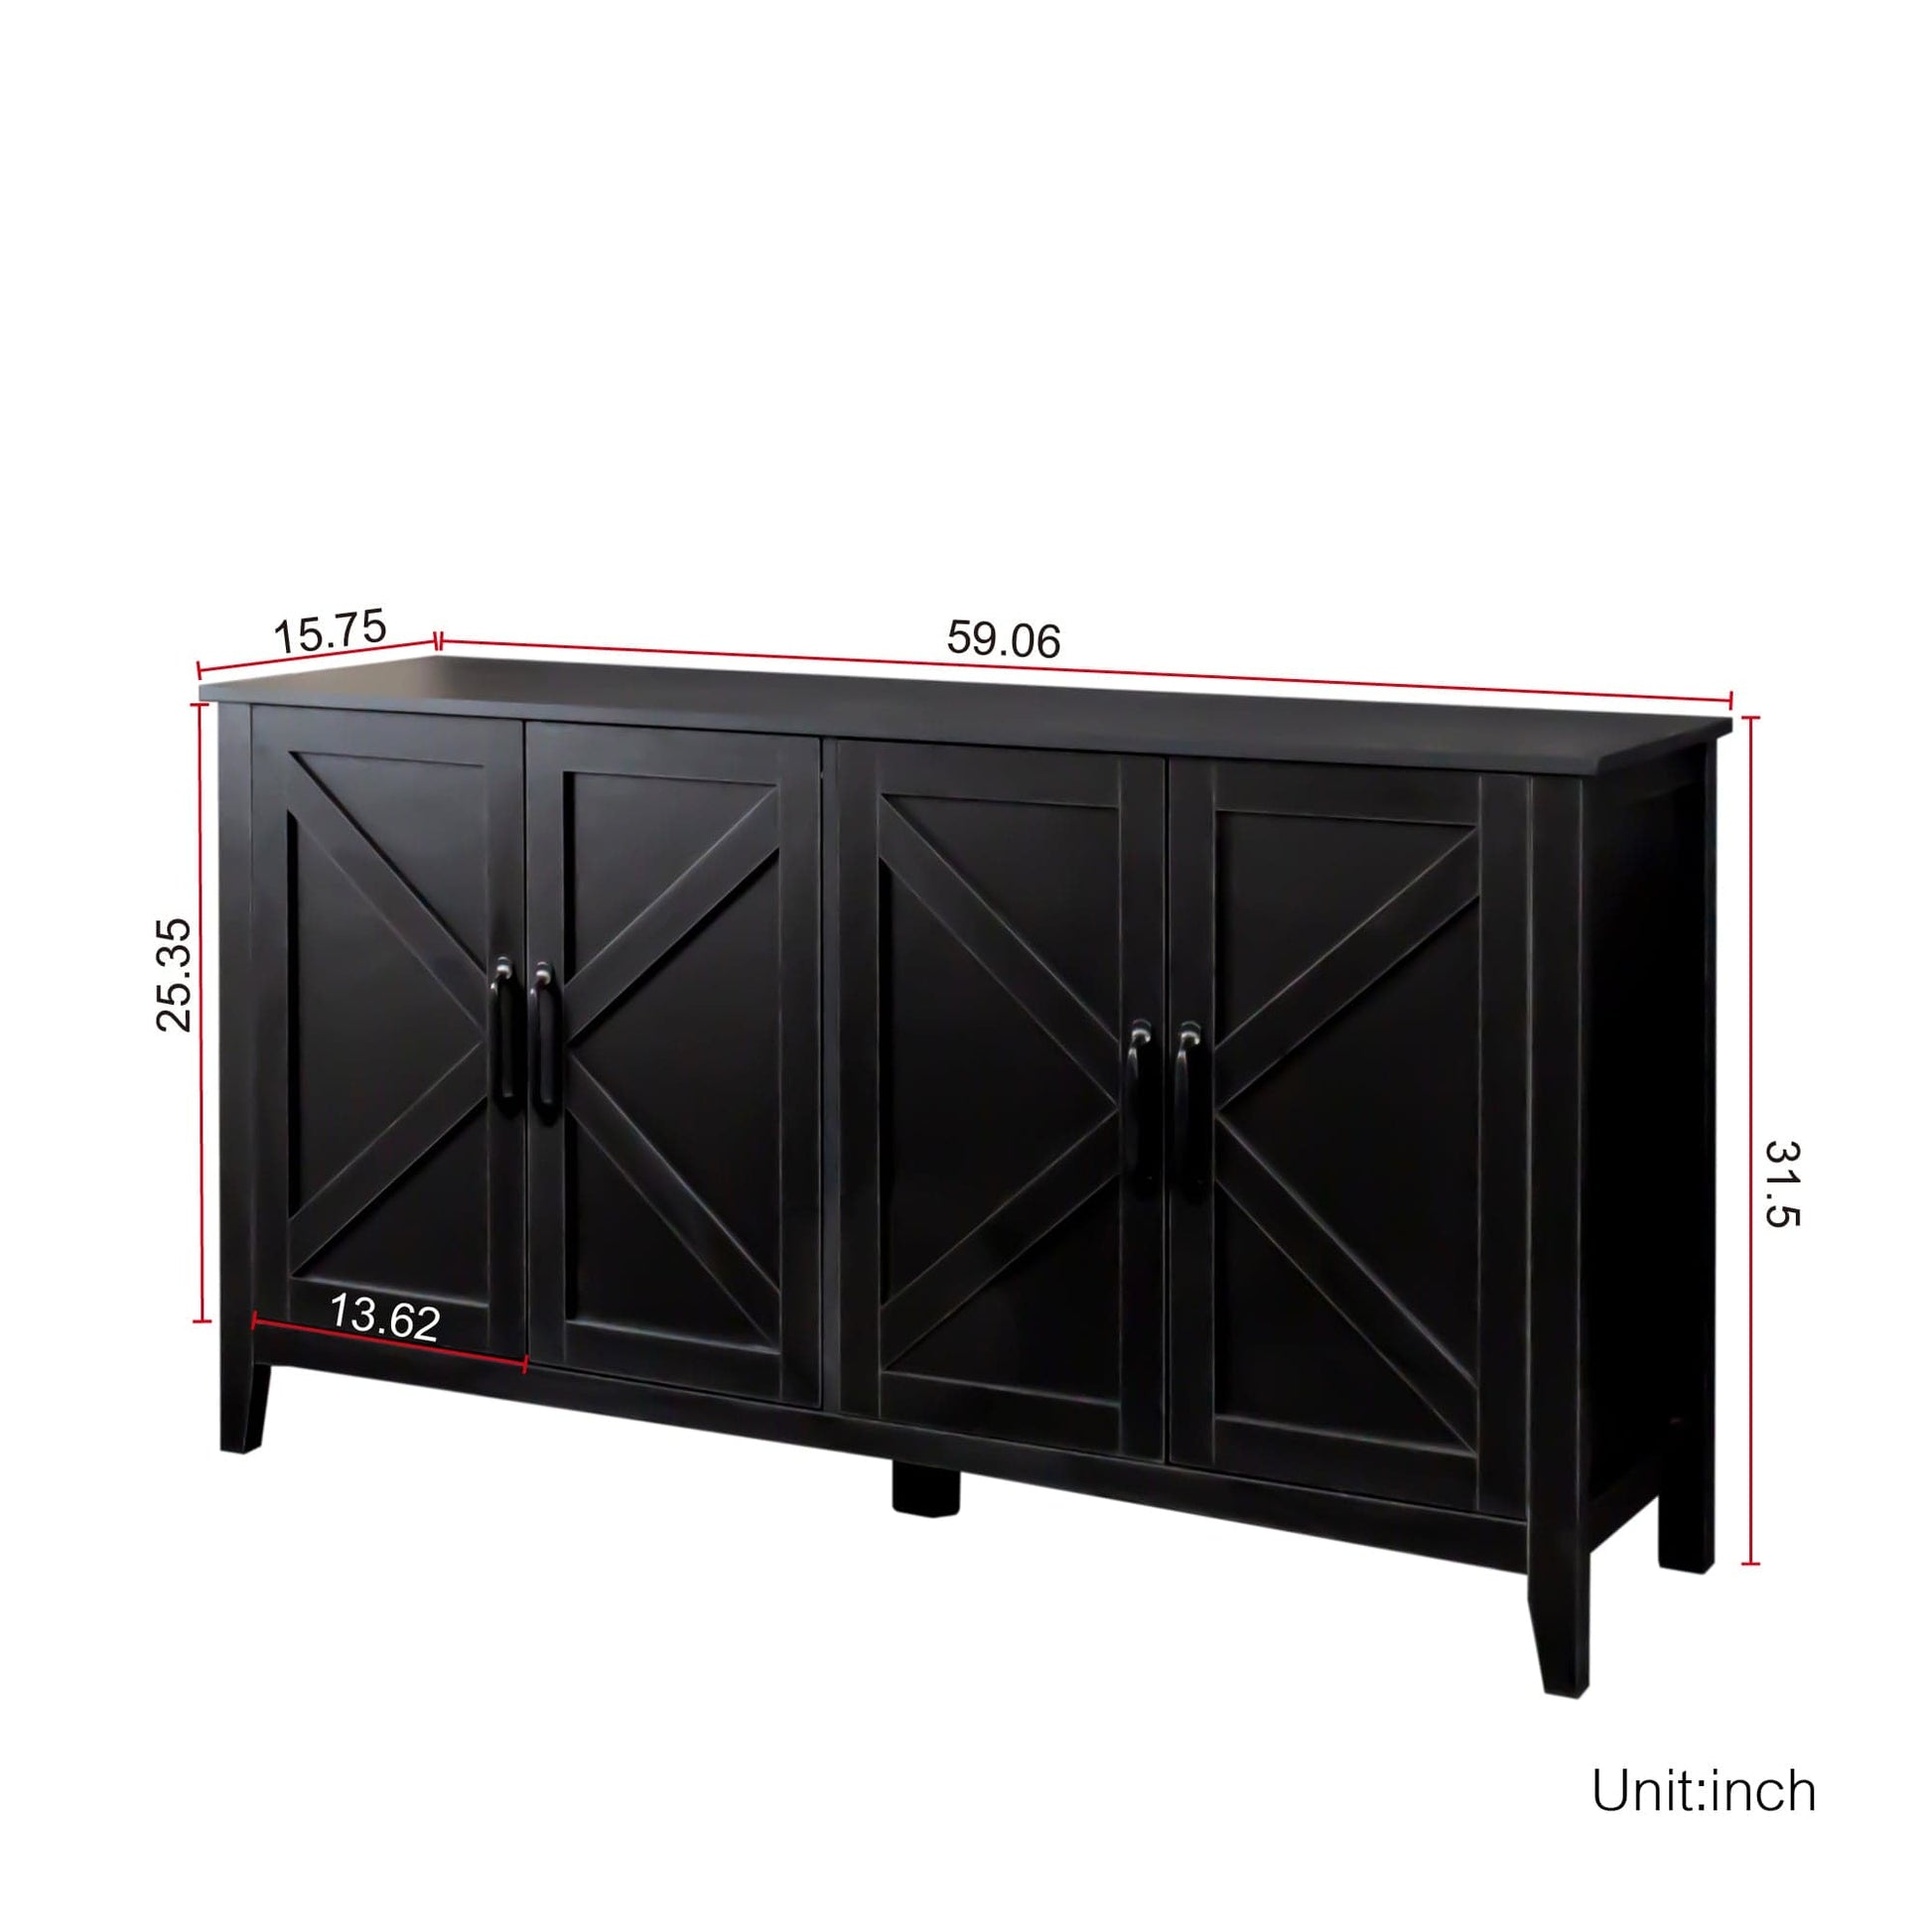 1st Choice Furniture Direct Storage Cabinet 1st Choice Sideboard Storage Cabinet with 4 Doors & Shelves